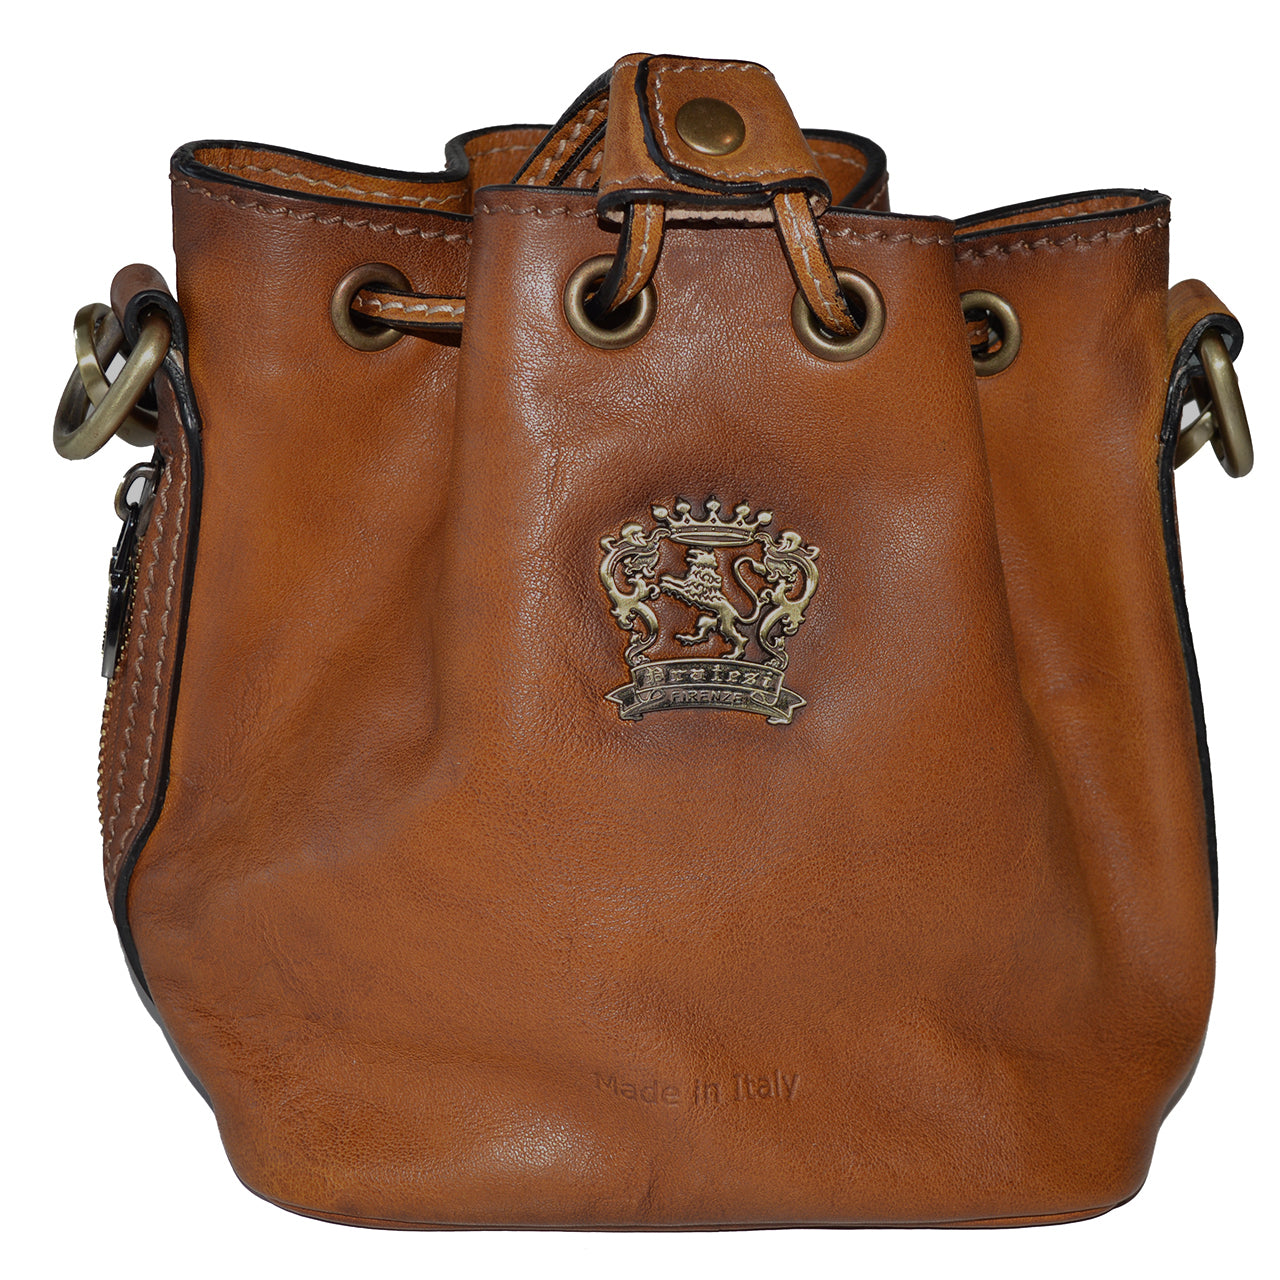 Pratesi Sorano Small Woman Bag in genuine Italian leather - Vegetable Tanned Italian Leather Brown